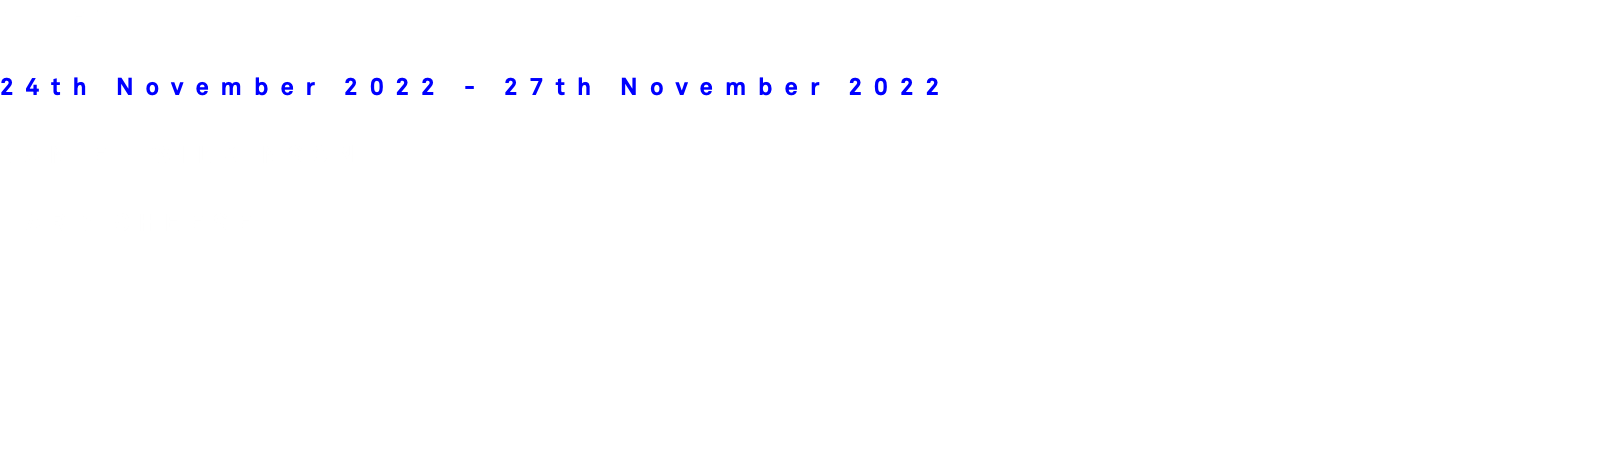 FILET 24th November 2022 - 27th November 2022 DANIEL WILKINSON HARD CHEESE 